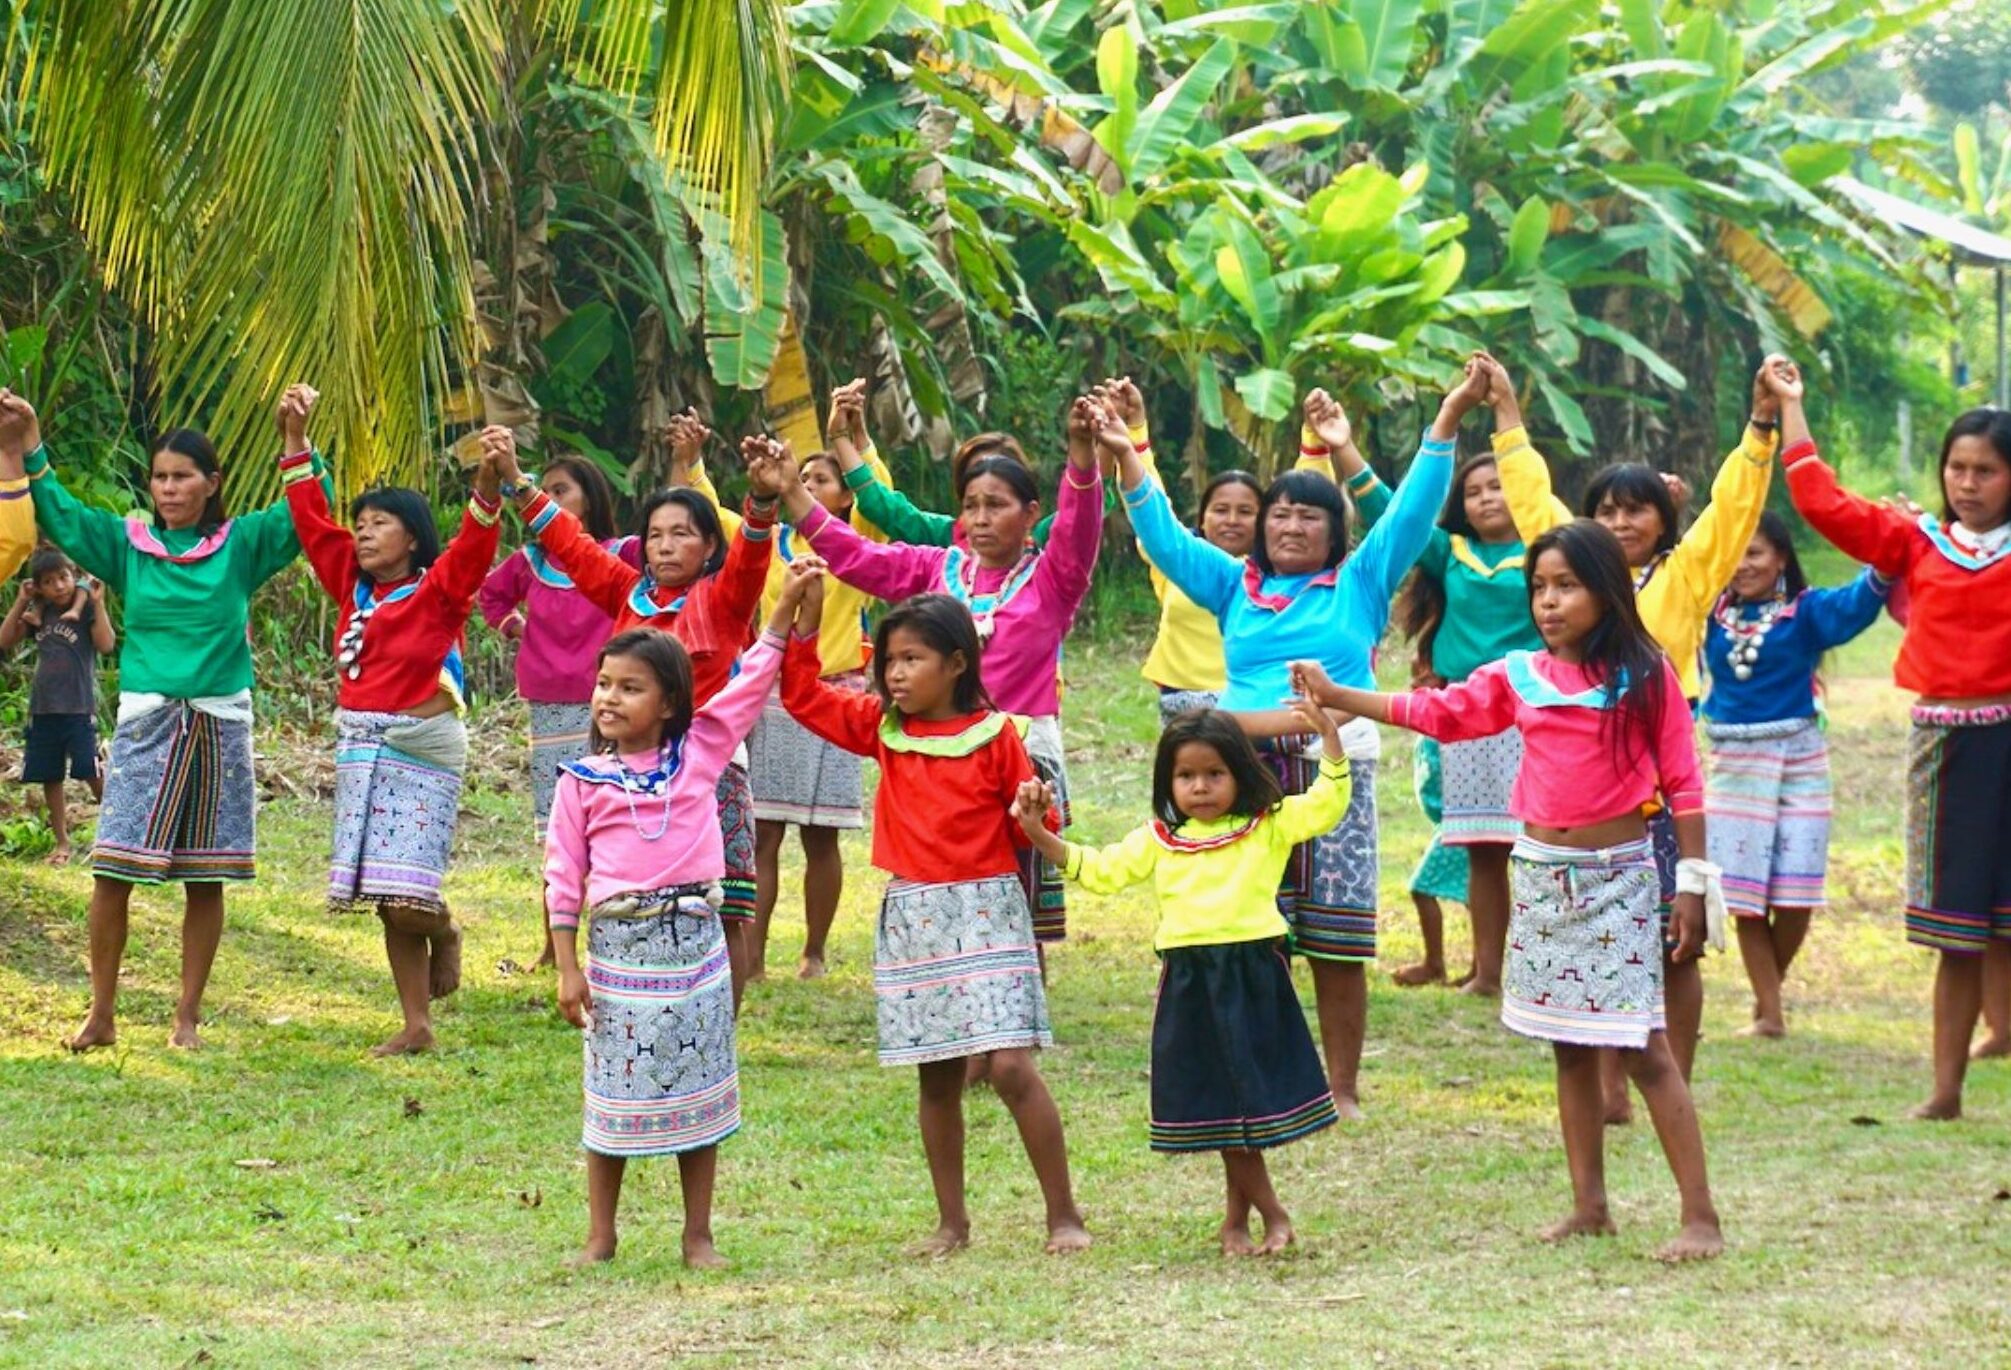 Shipibo women and girls from the Peruvian Amazon rainforest. IMAGE CREDIT: Rainforest Foundation US